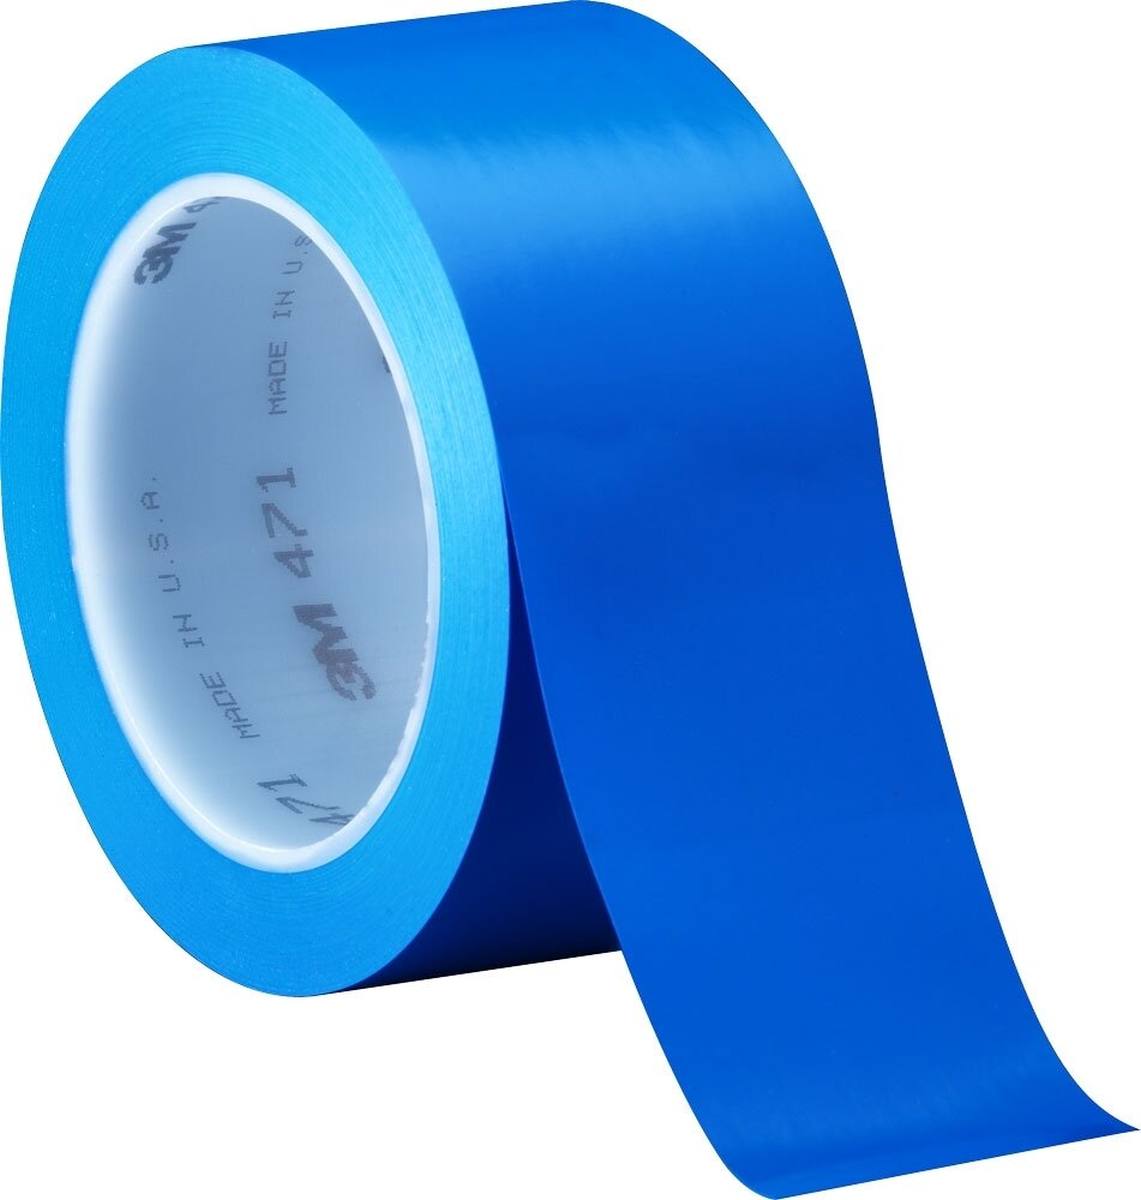 3M ruban adhésif en PVC souple 471 F, bleu, 50 mm x 33 m, 0,13 mm, emballage individuel pratique